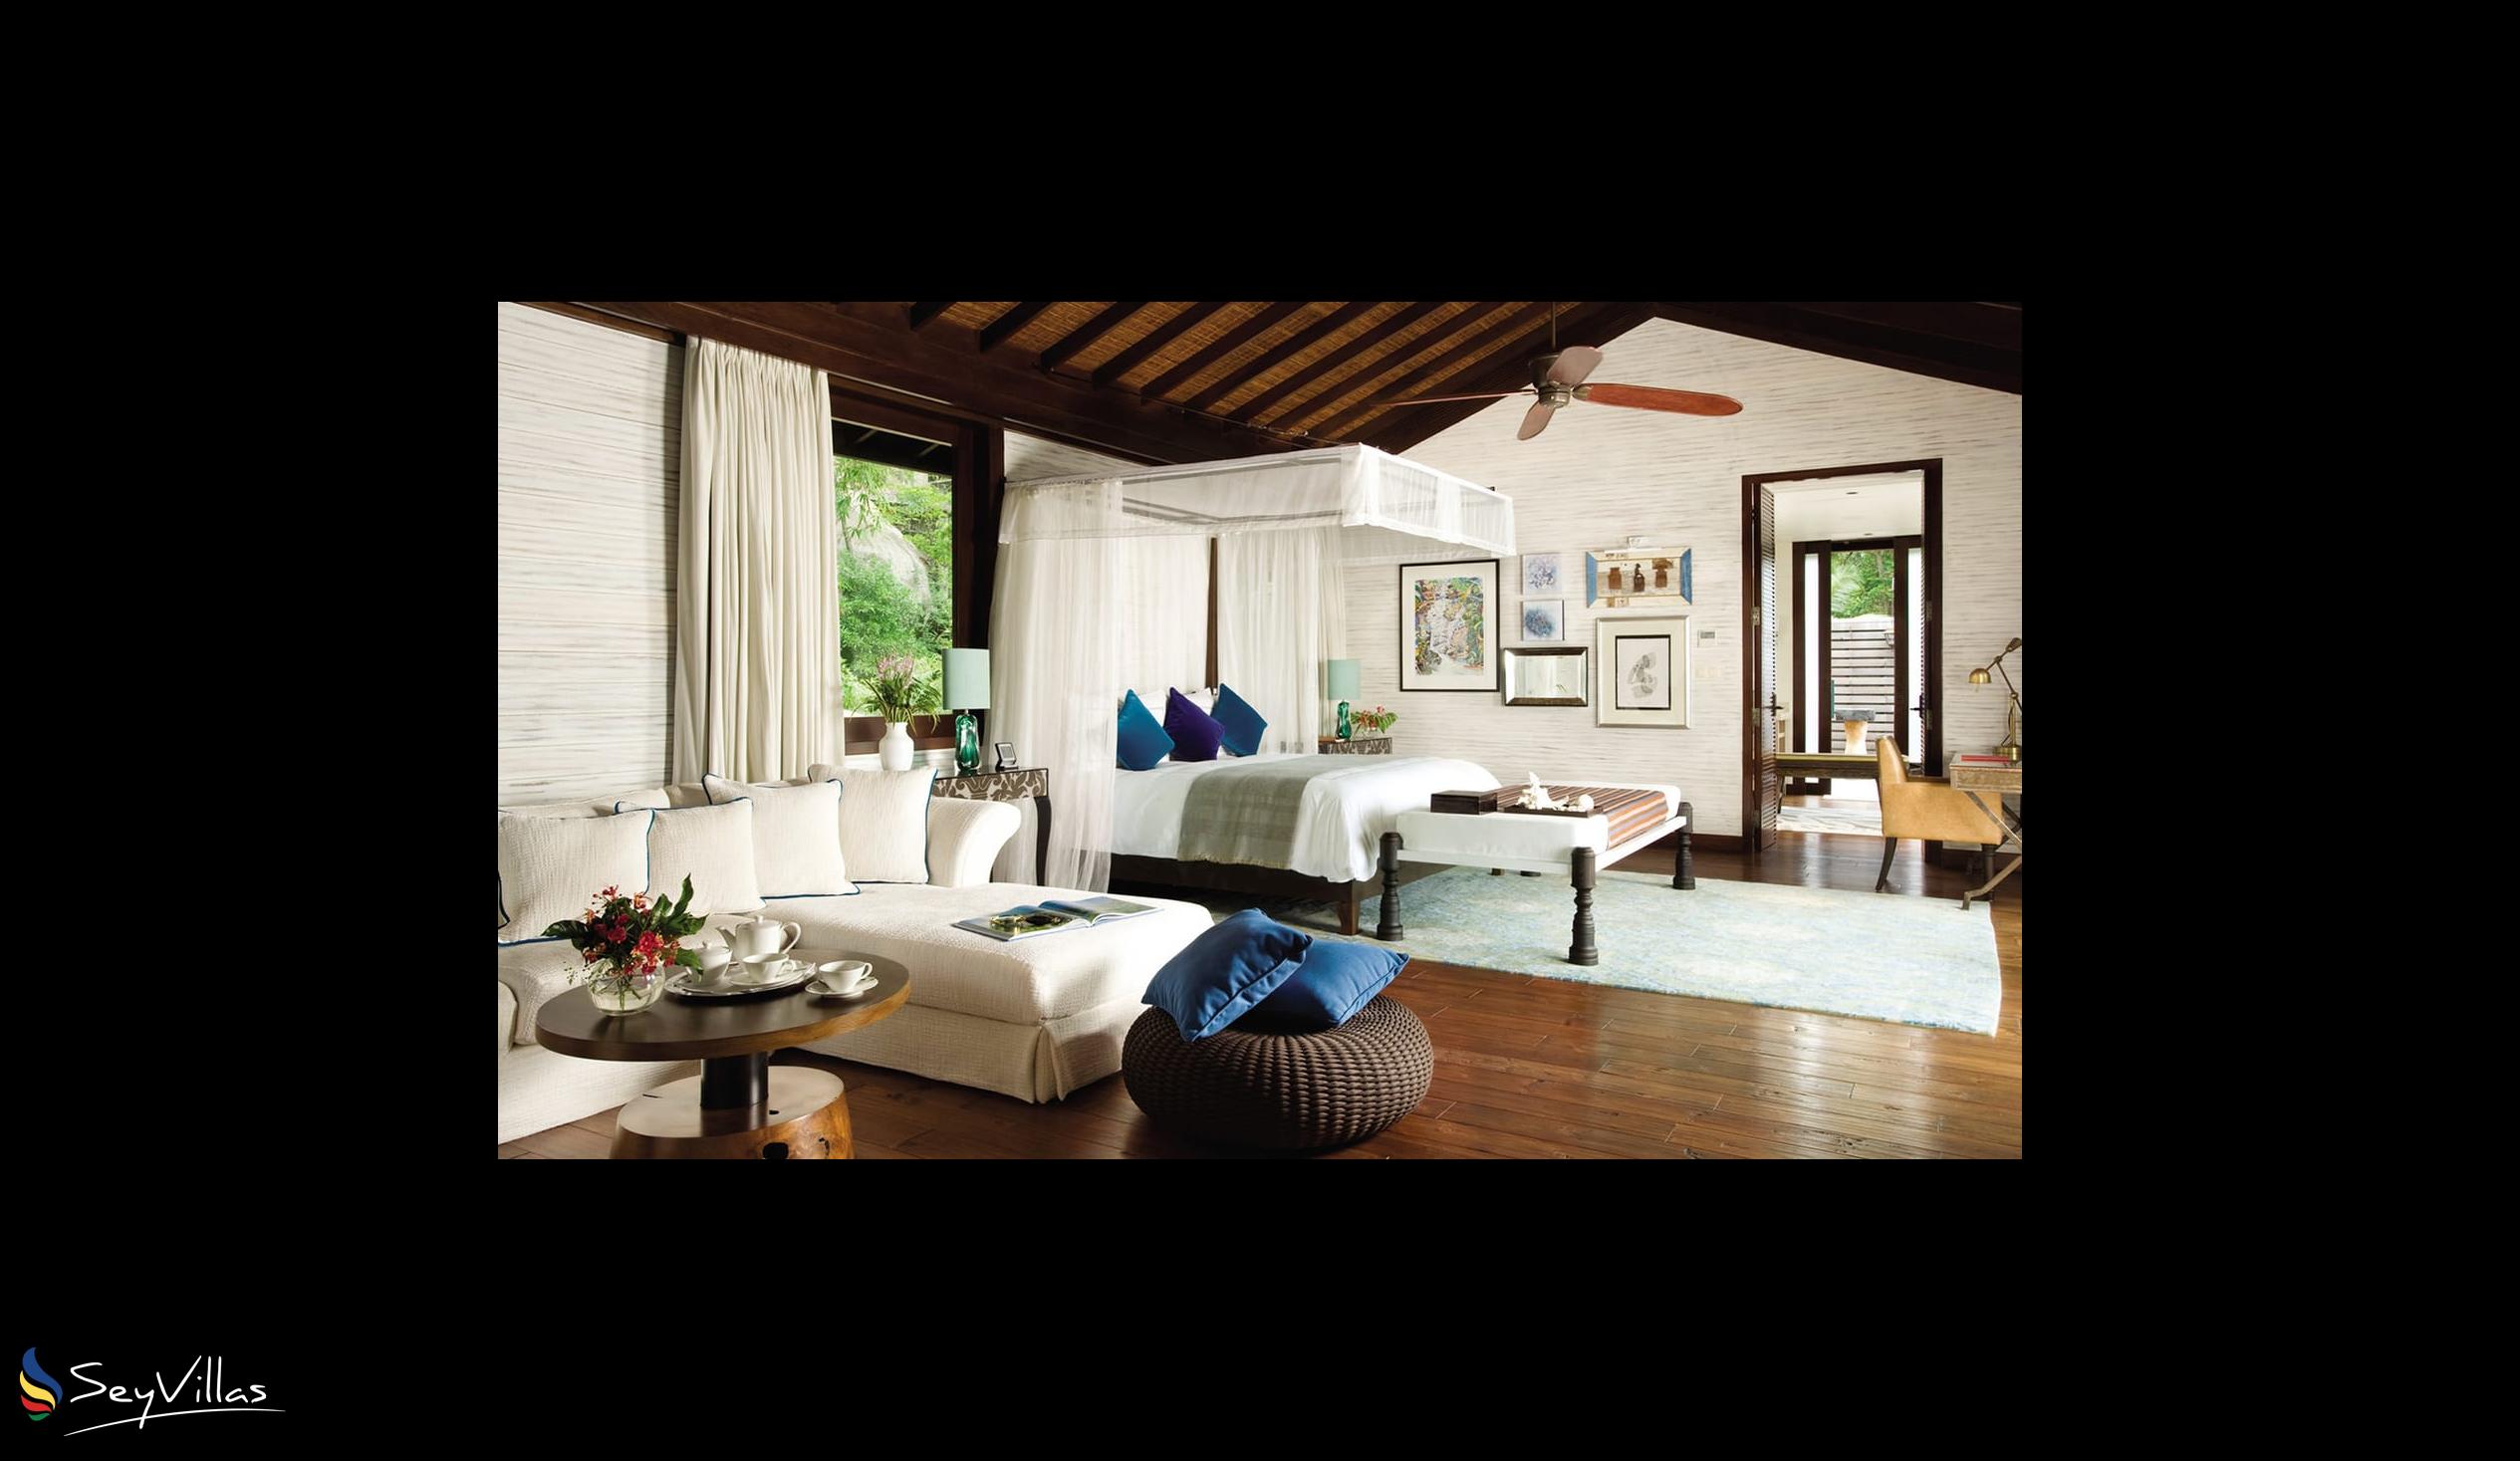 Photo 58: Four Seasons Resort - 3-Bedroom Presidential Suite - Mahé (Seychelles)